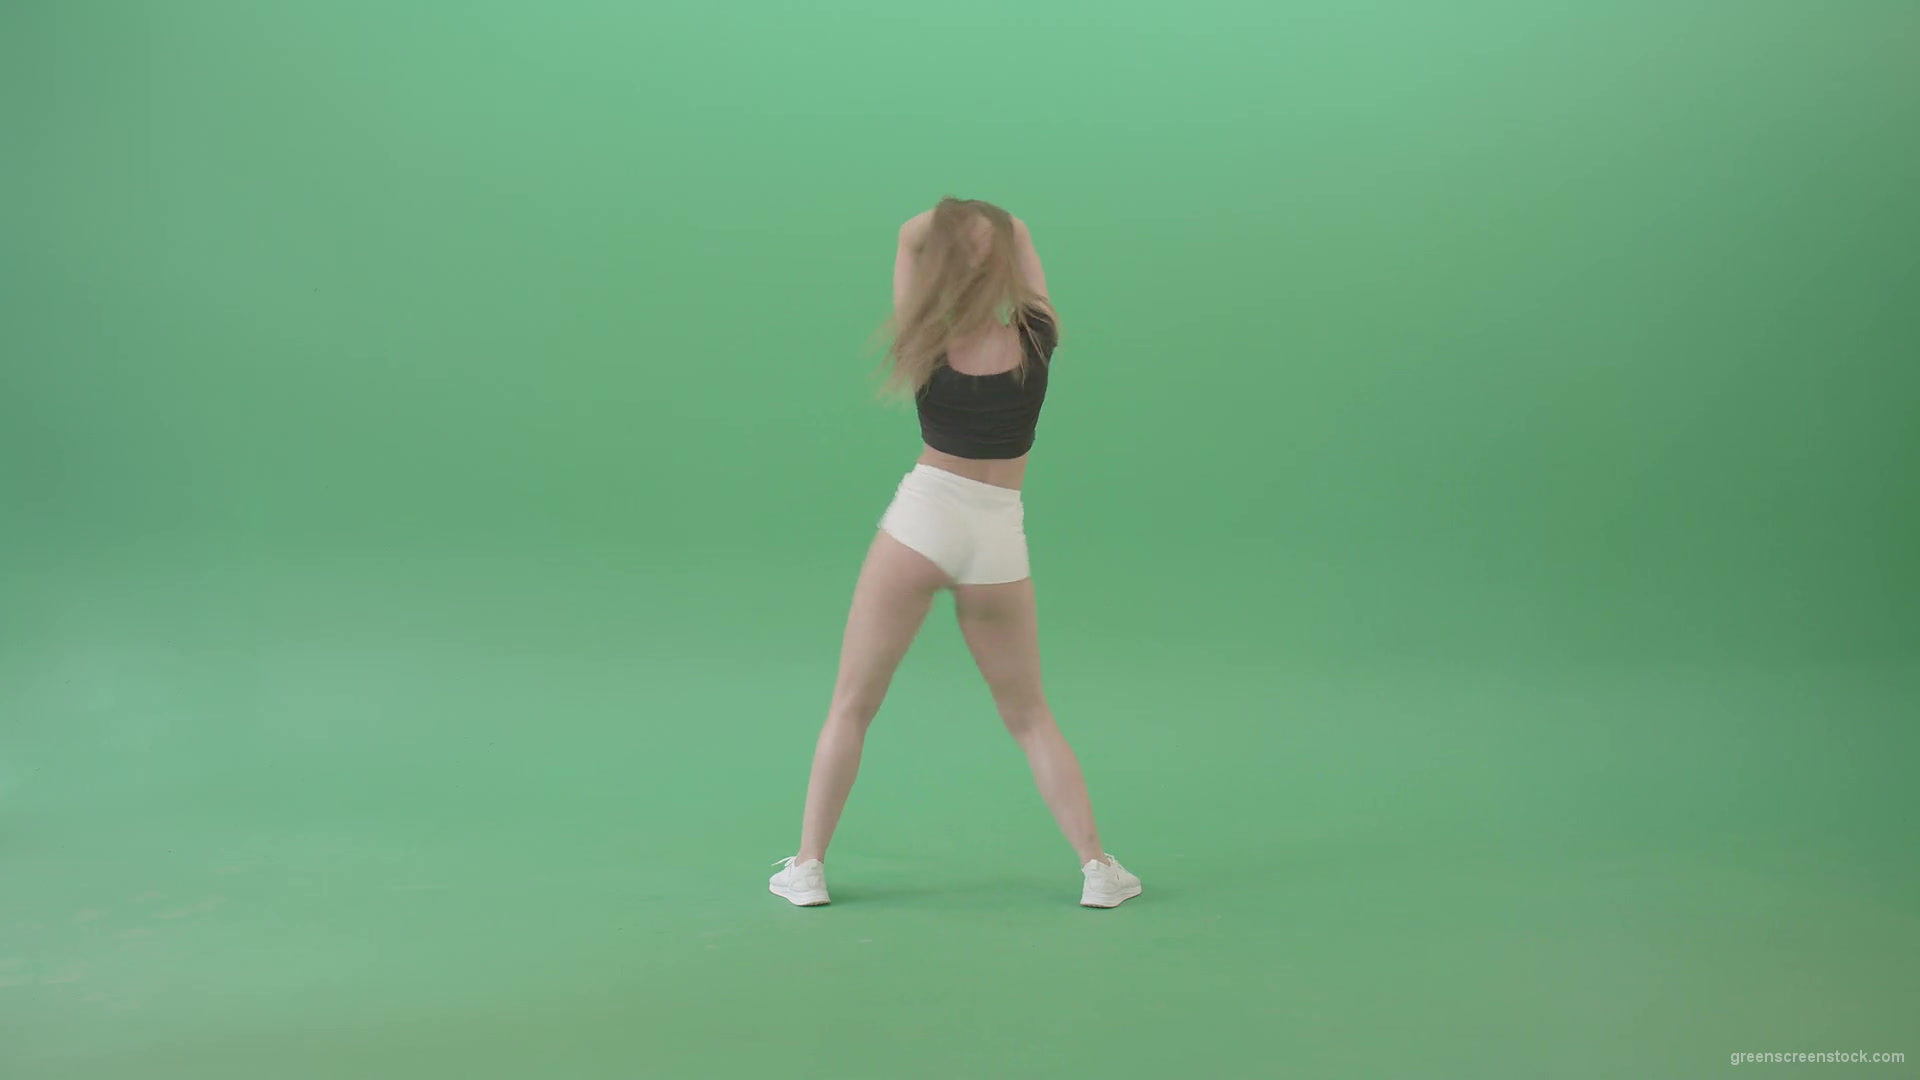 Amazing-girl-making-dancing-infinity-looping-element-twerking-hips-isolated-on-Green-Screen-4K-Video-Footage-1920_007 Green Screen Stock